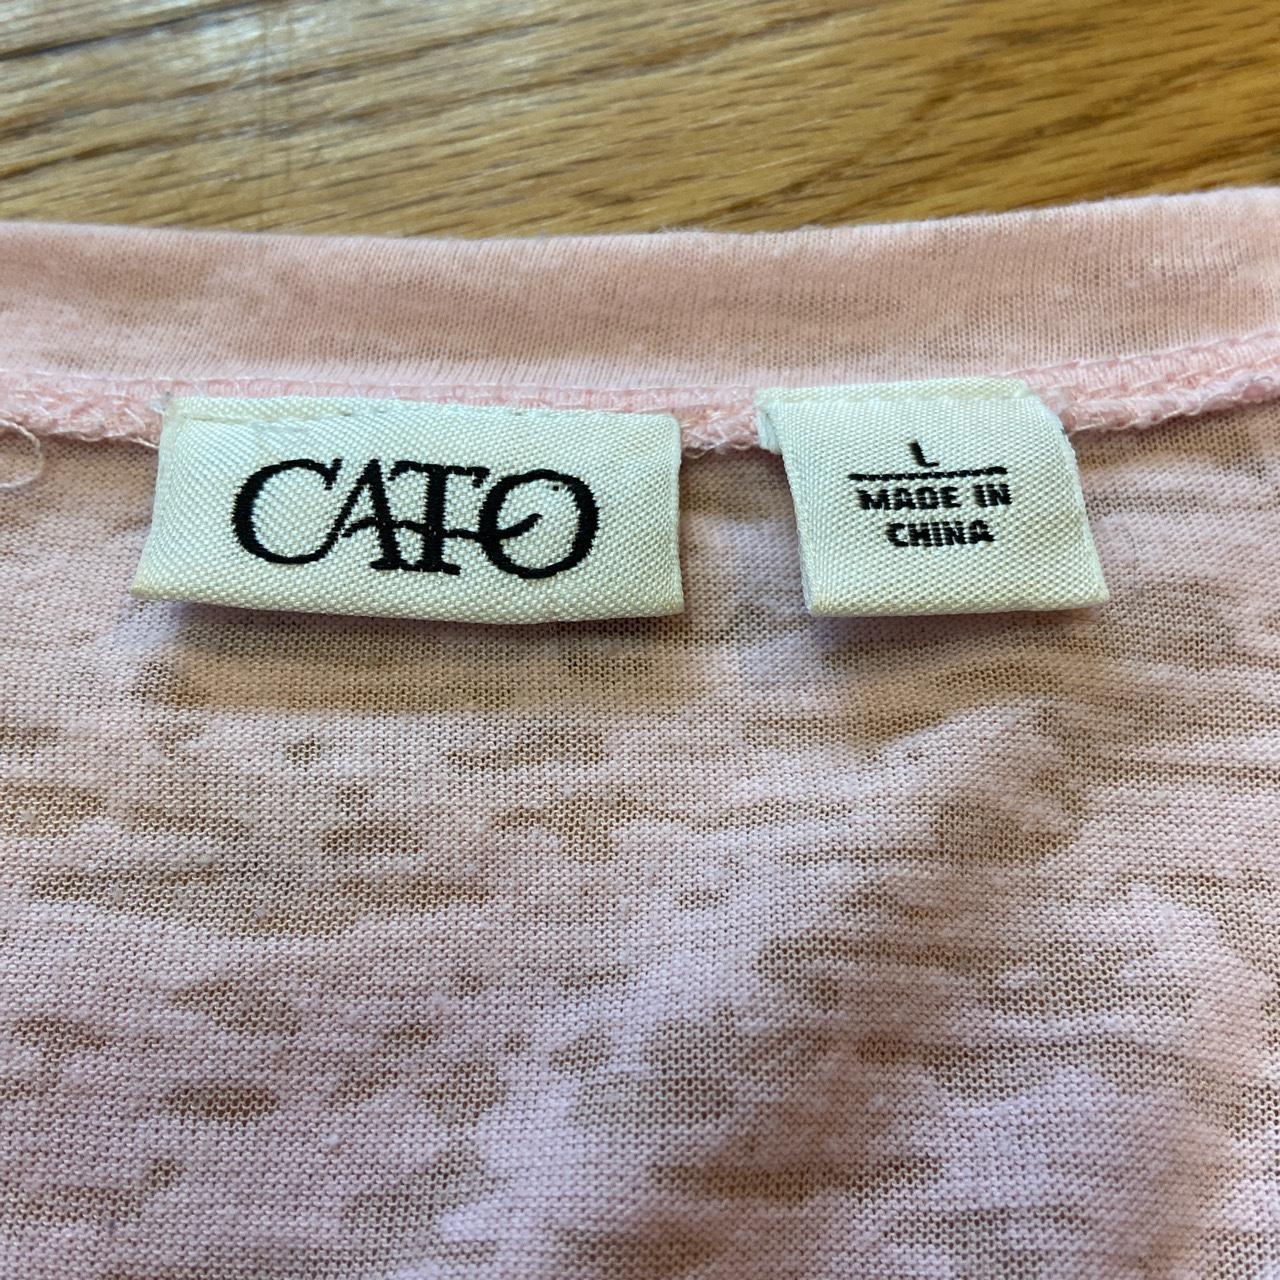 Cato Women's Pink and Black Shirt (3)